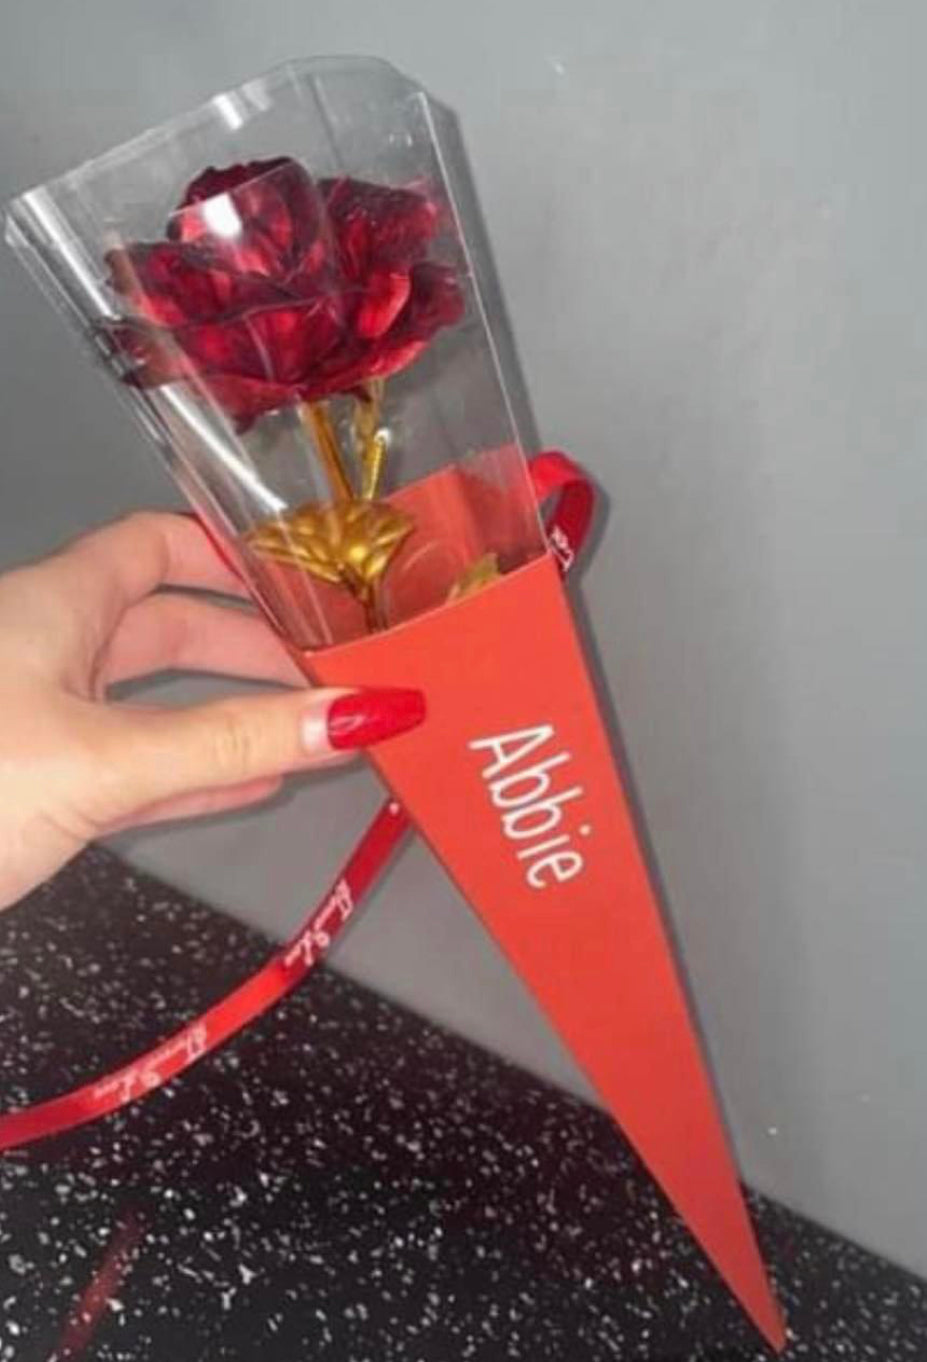 ❤️ Valentine’s Day 24 carat gold plated box rose❤️